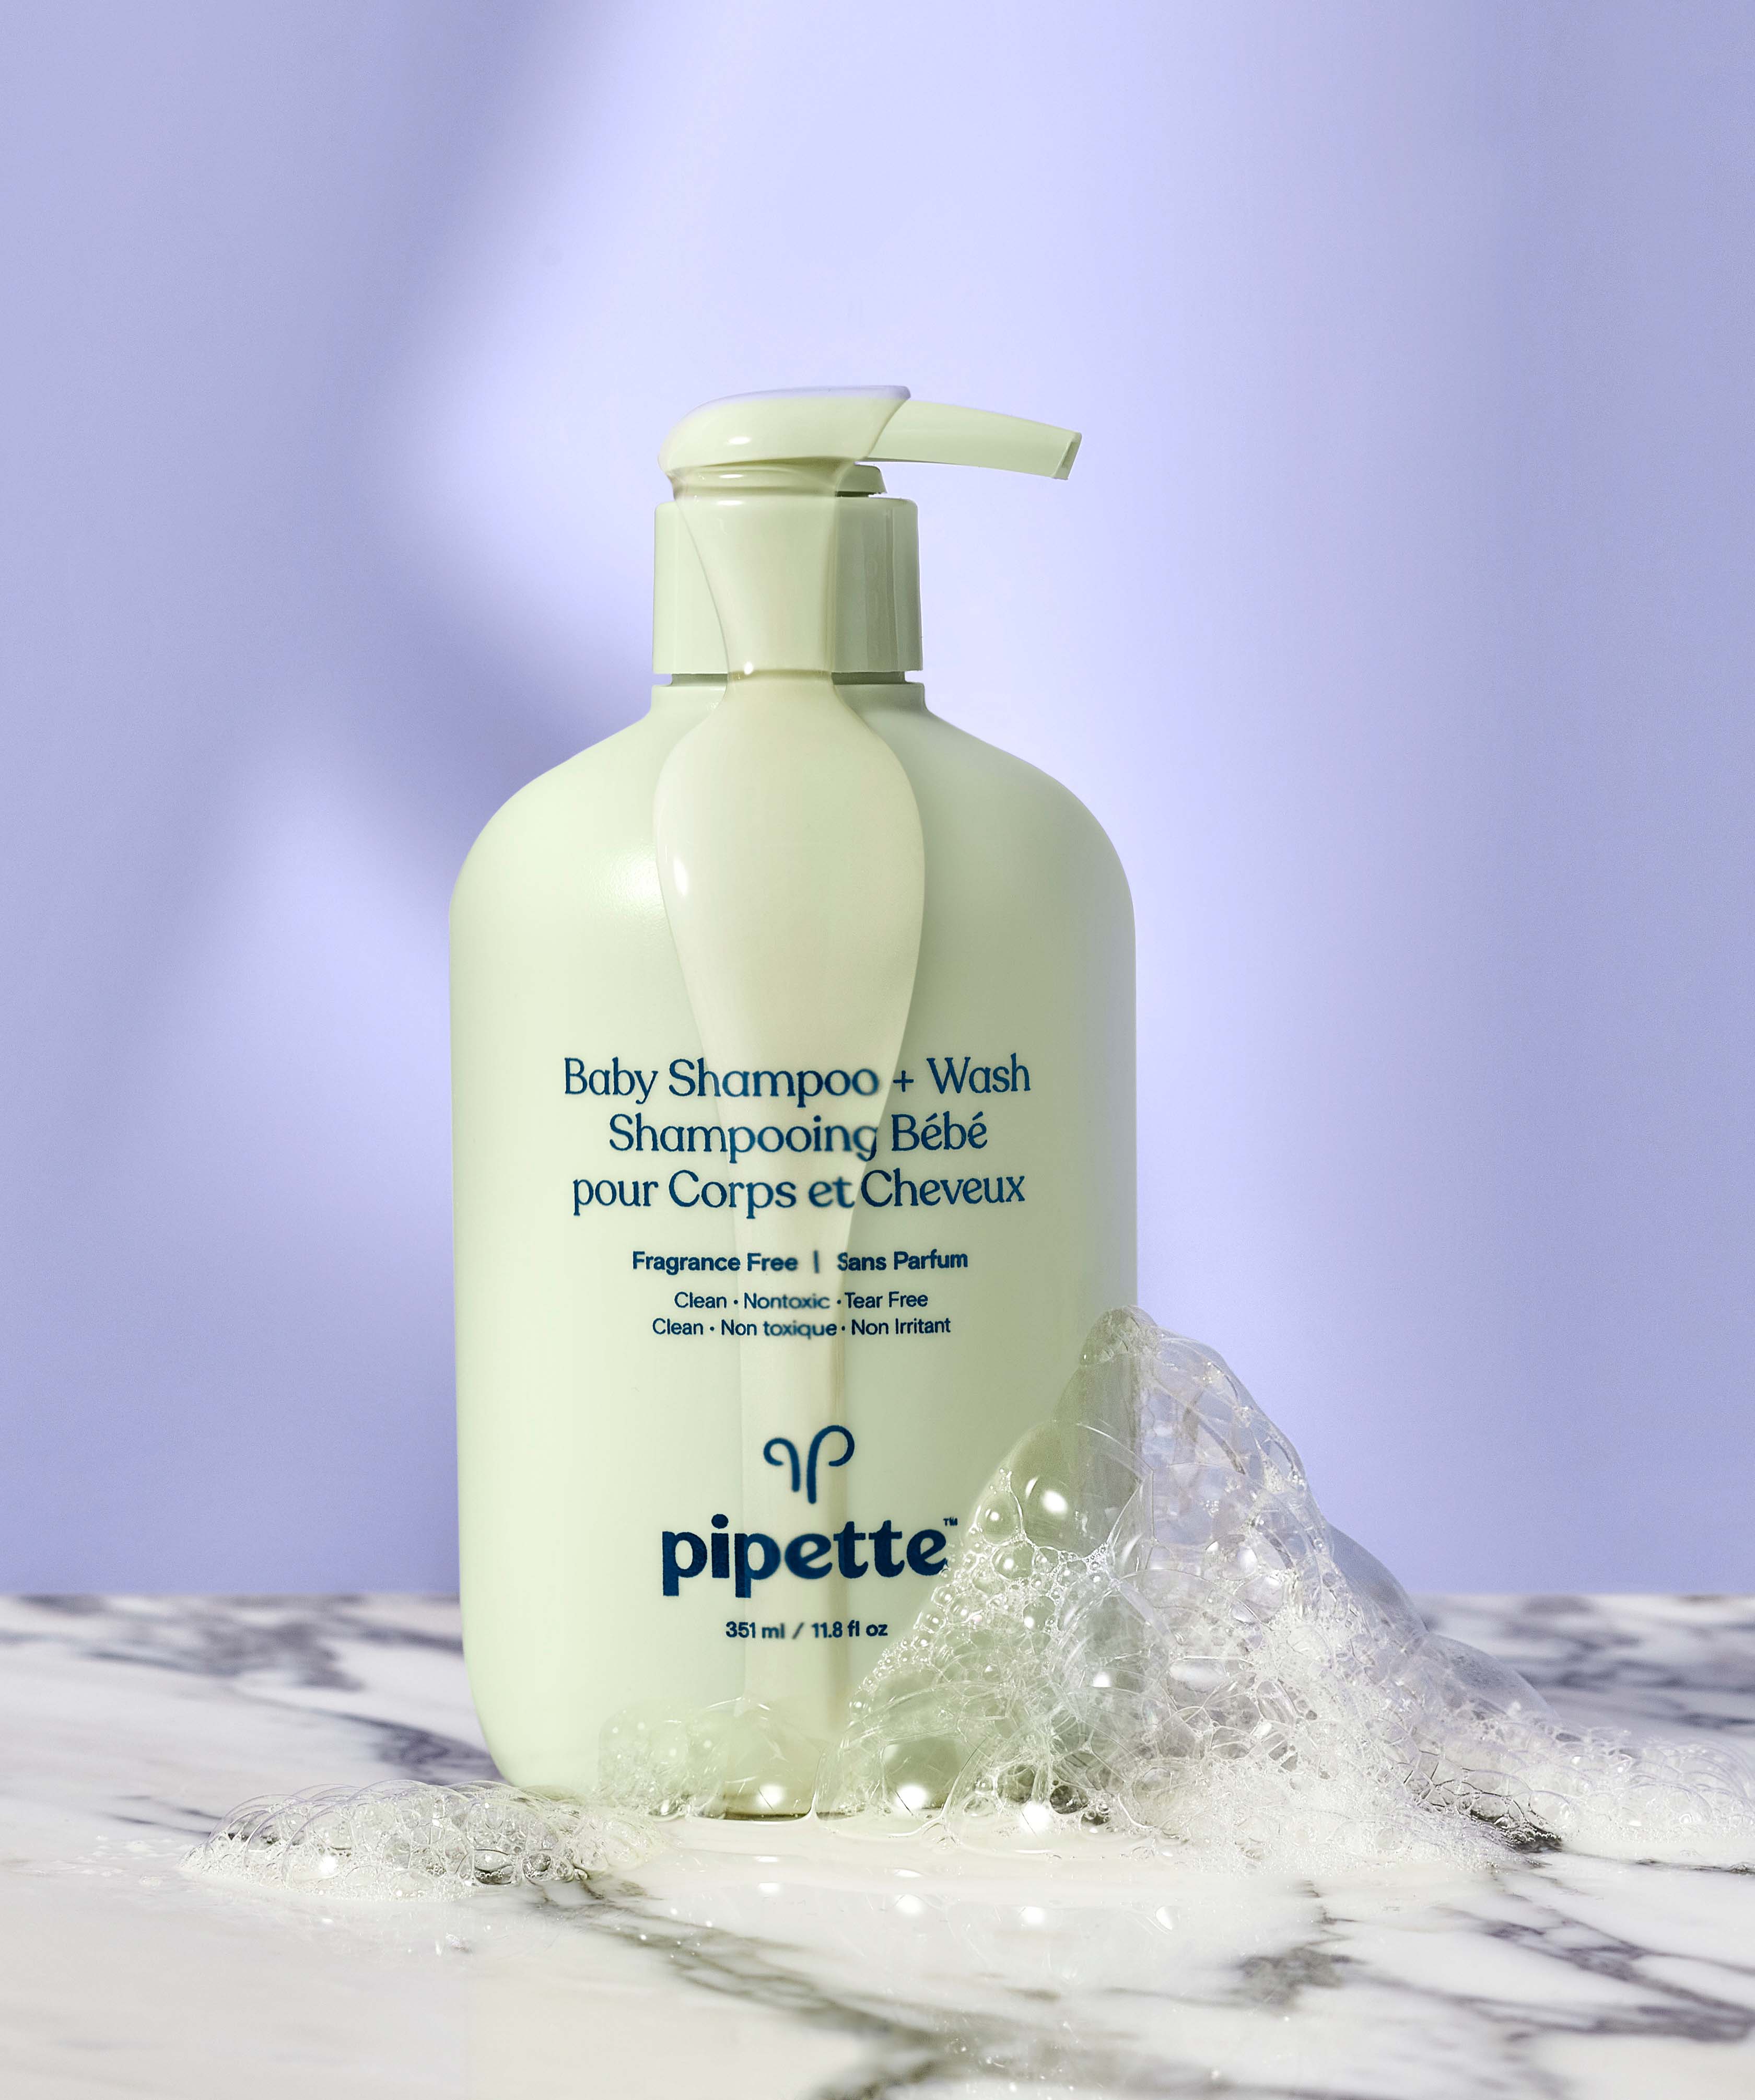 Baby Shampoo + Wash in Fragrance Free.